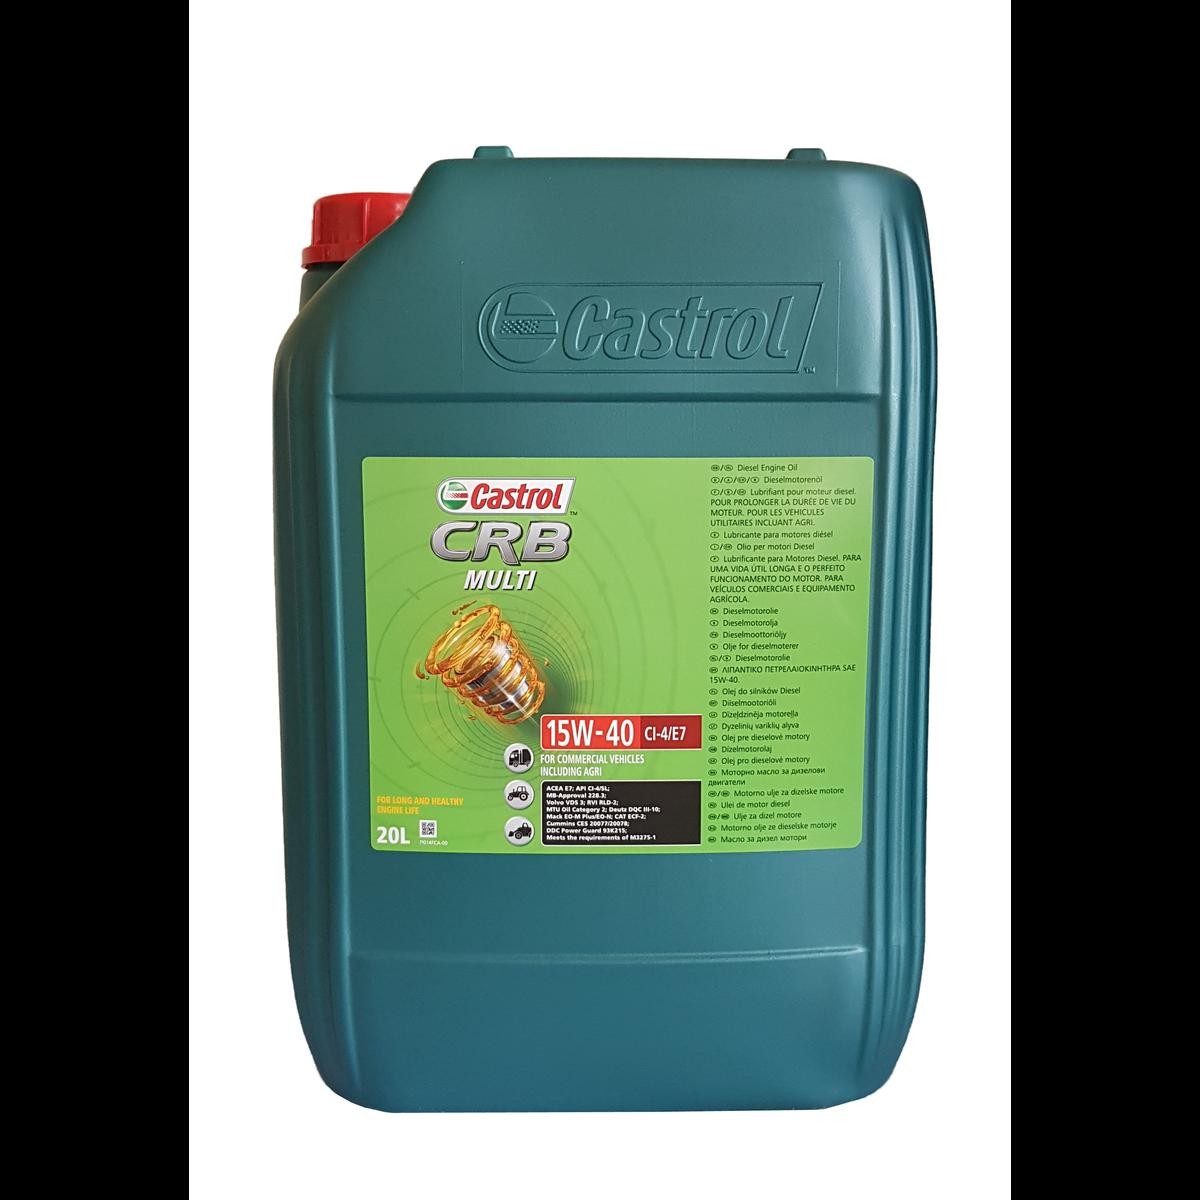 CASTROL Vecton 15W-40, 20l, Mineral Oil Motor oil 1548AC buy